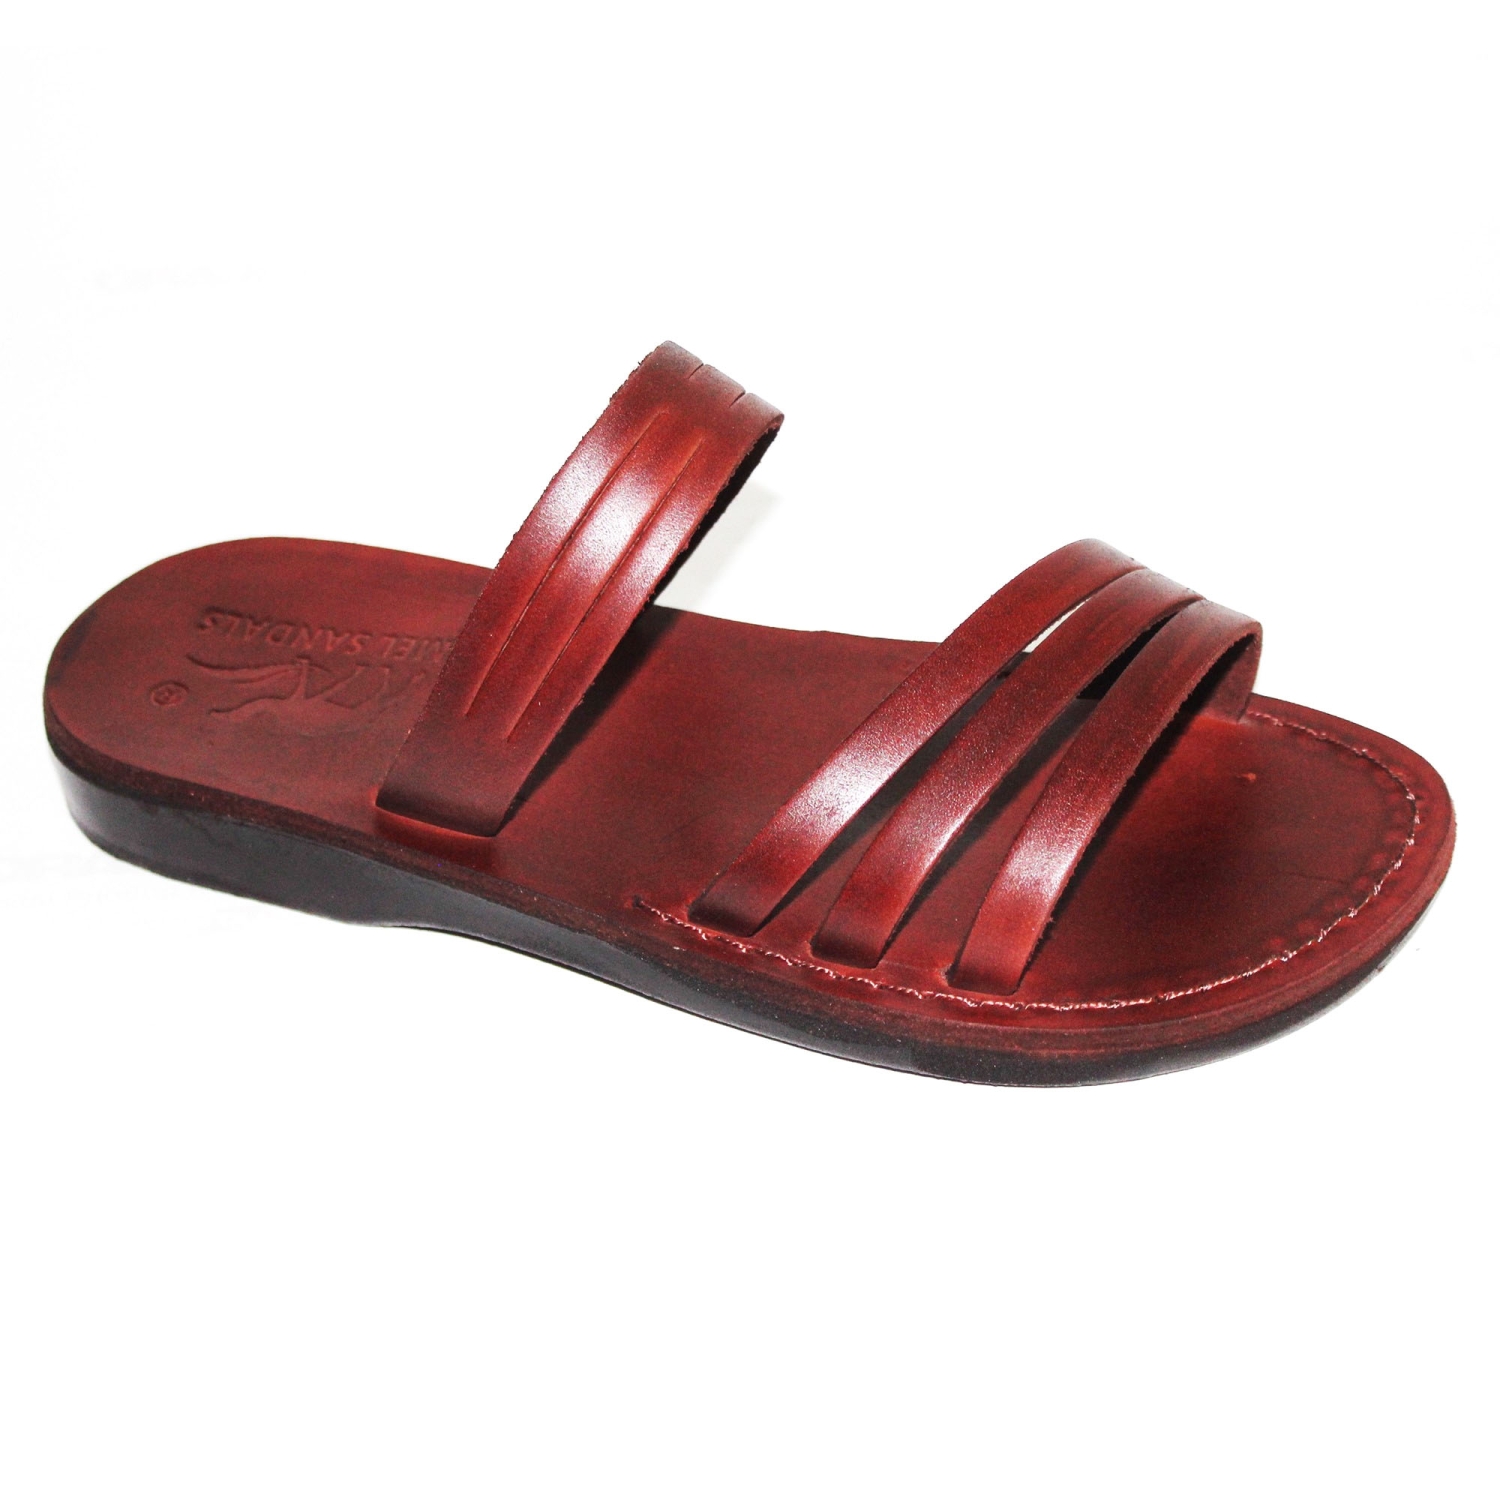 Yafit Handmade Leather Sandals - 1